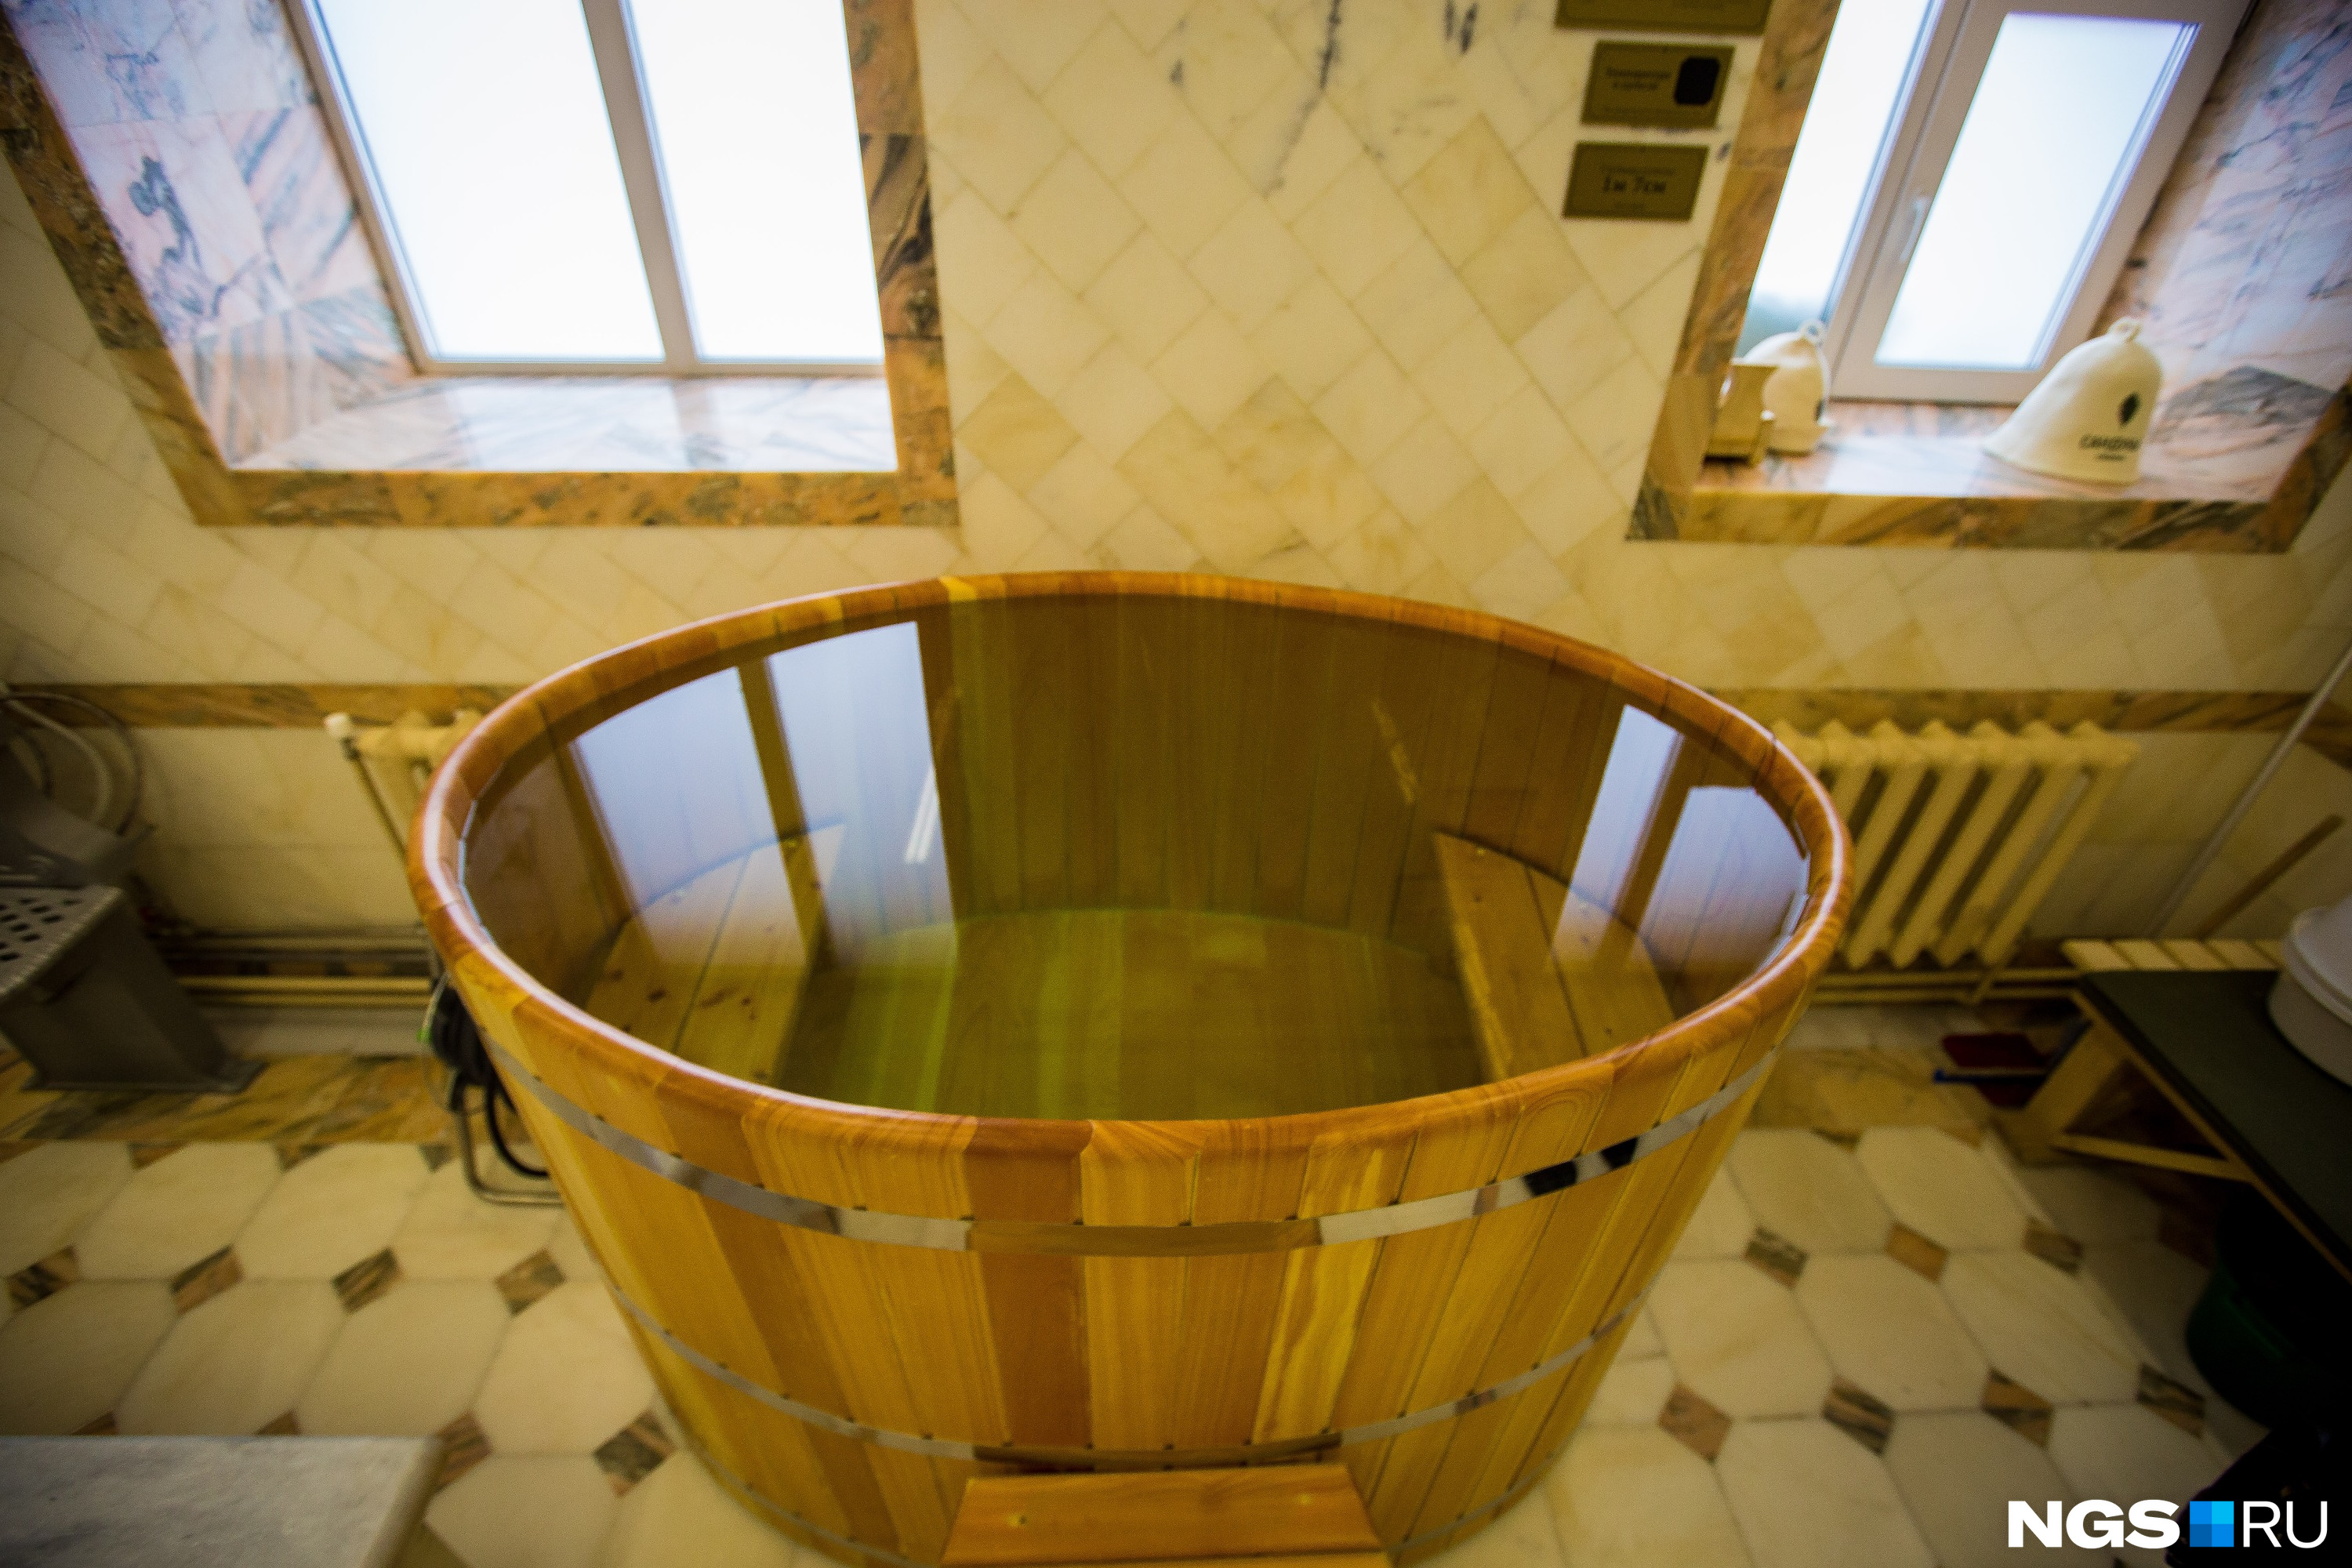 Пол в бане сделан из красноярского мрамора